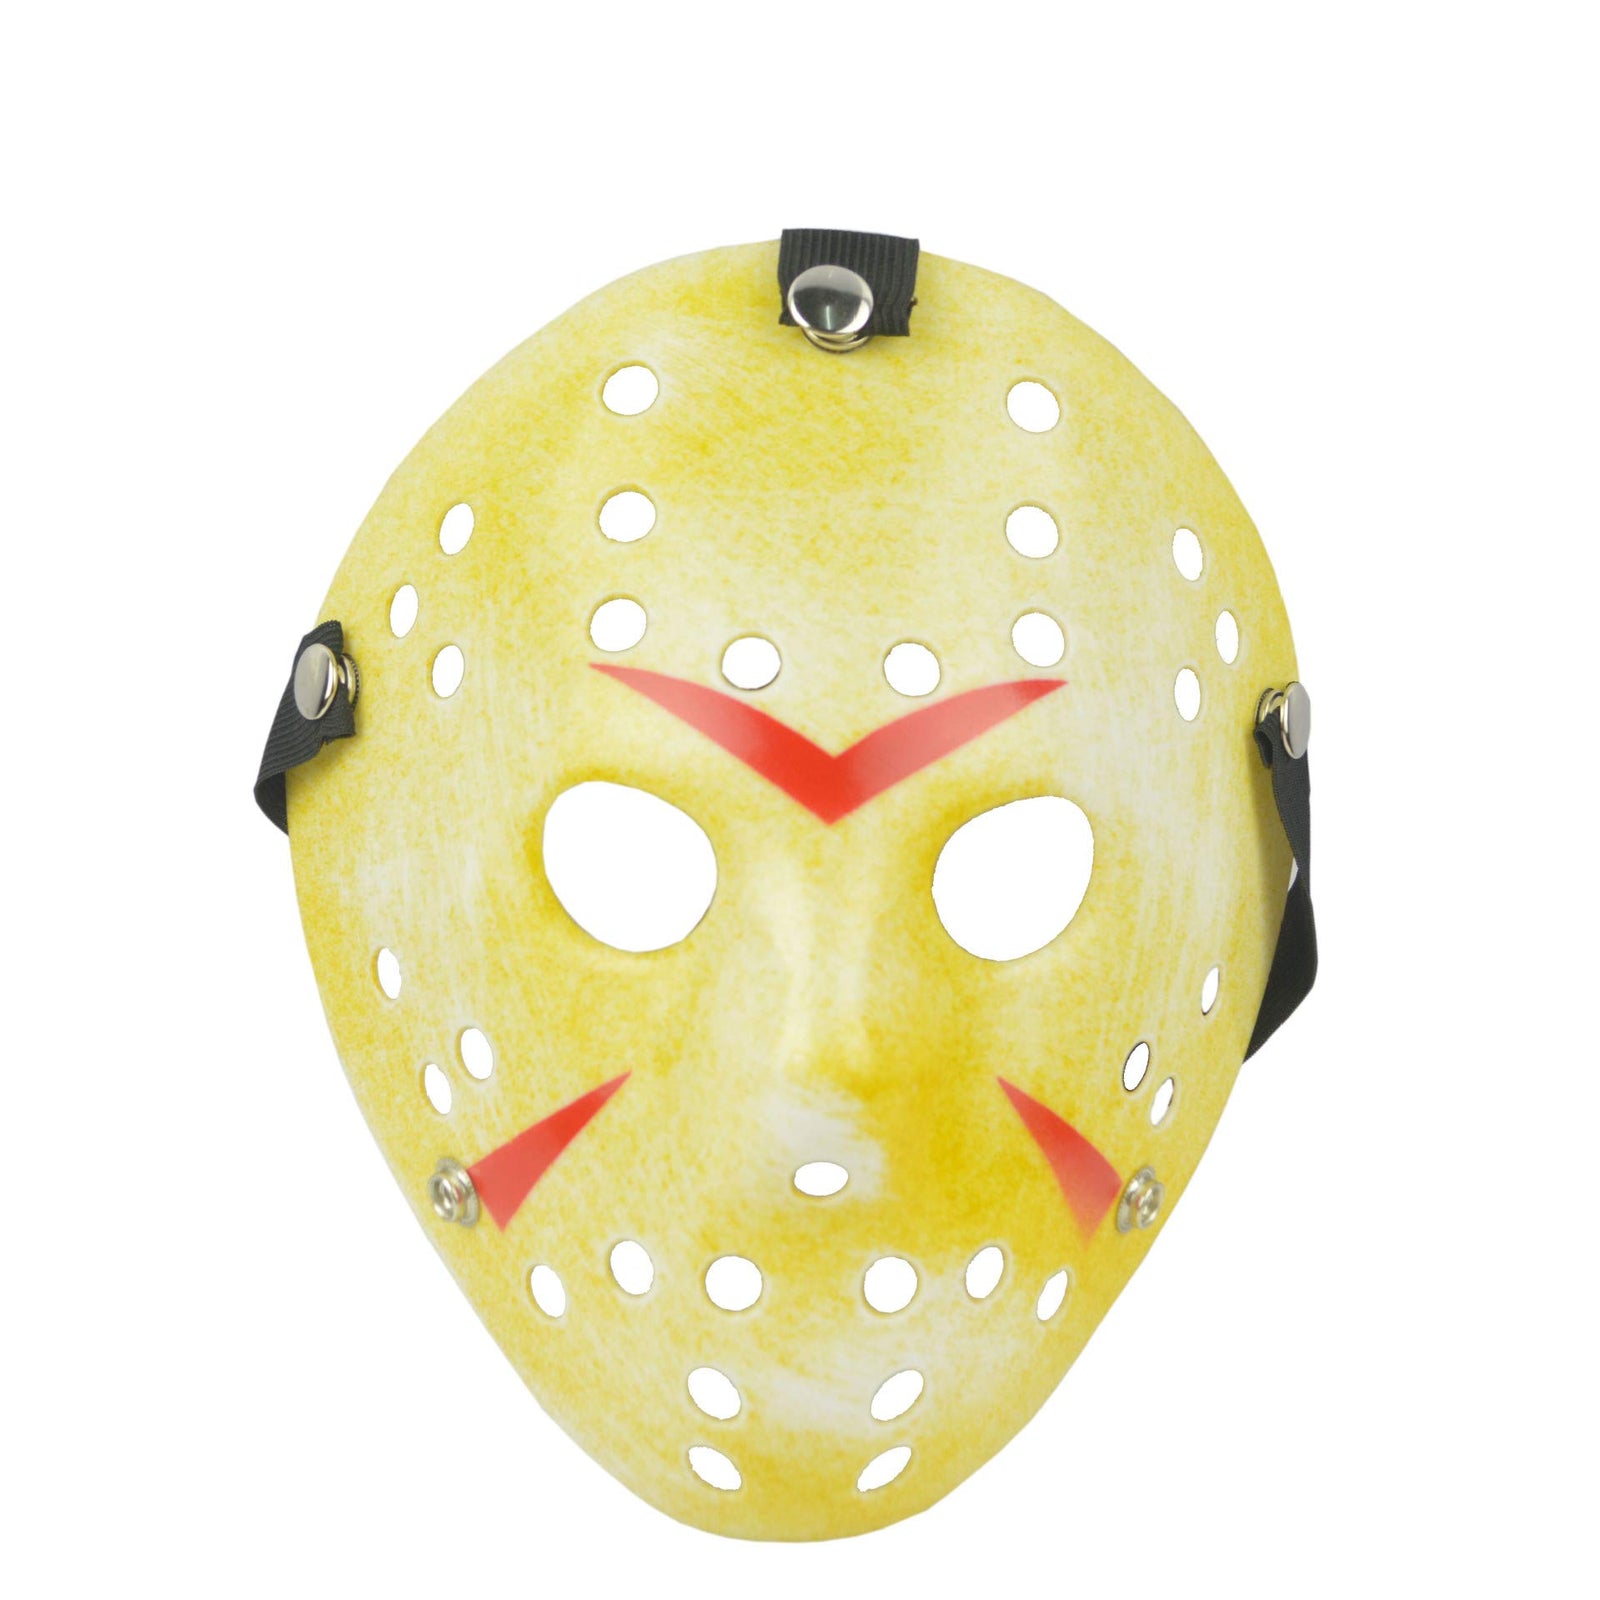 IronBuddy 3Pcs Jason Hockey Mask Costume Mask Prop for Cosplay Masquerade Party Halloween Decorations Dress Up